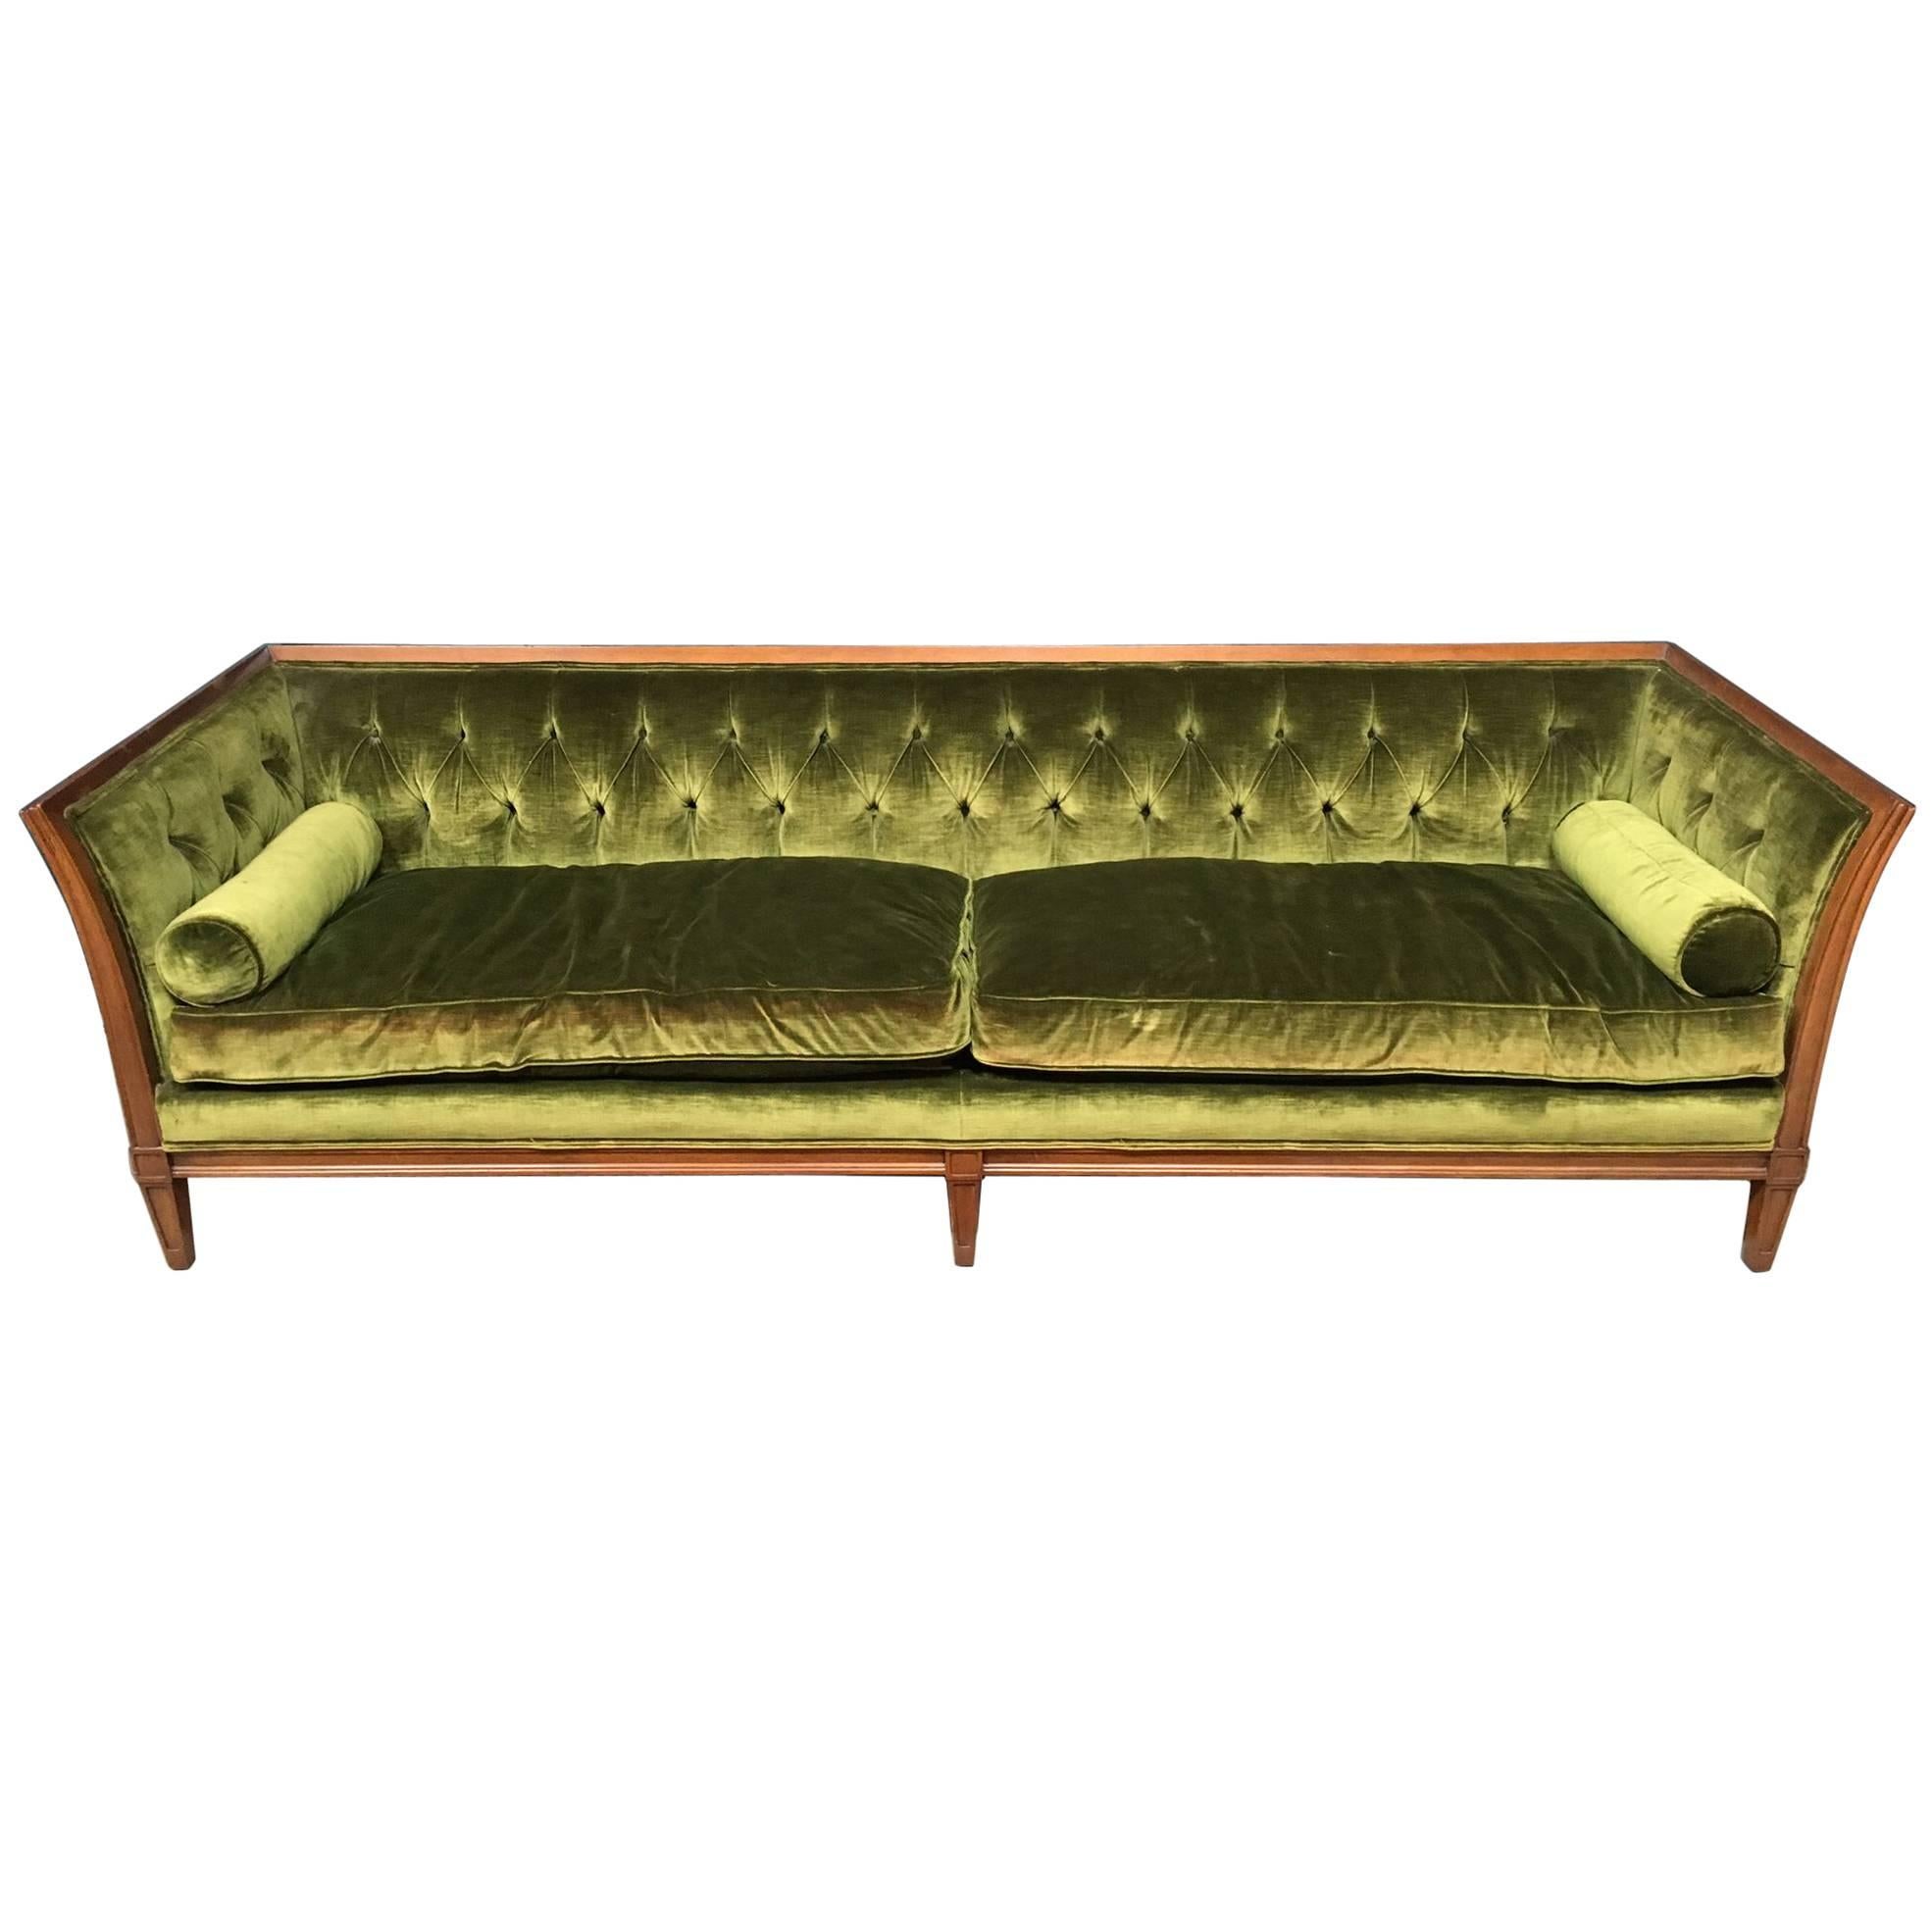 Antique French Velvet Chesterfield Sofa with Bolster Pillows